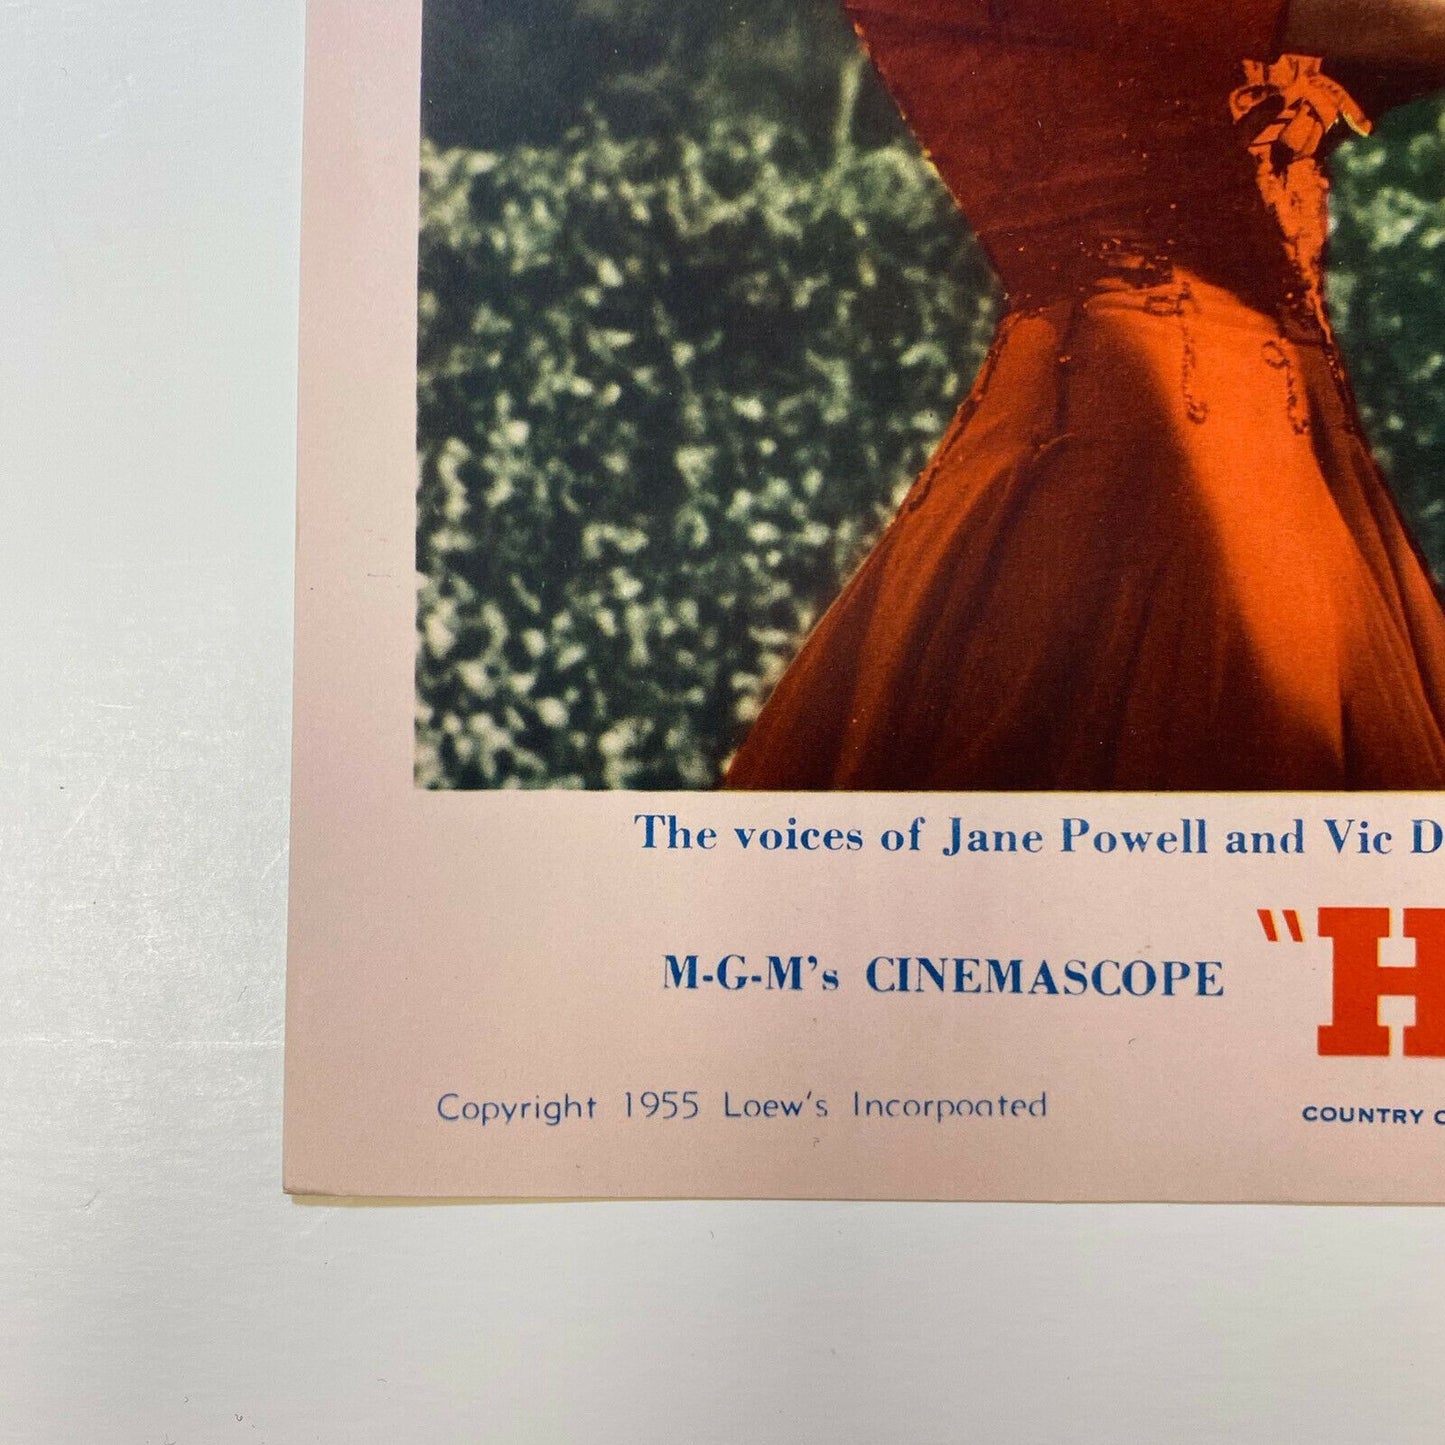 Hit The Deck ORIGINAL 1955 Lobby Card 4 Movie Poster Debbie Reynolds Near MINT